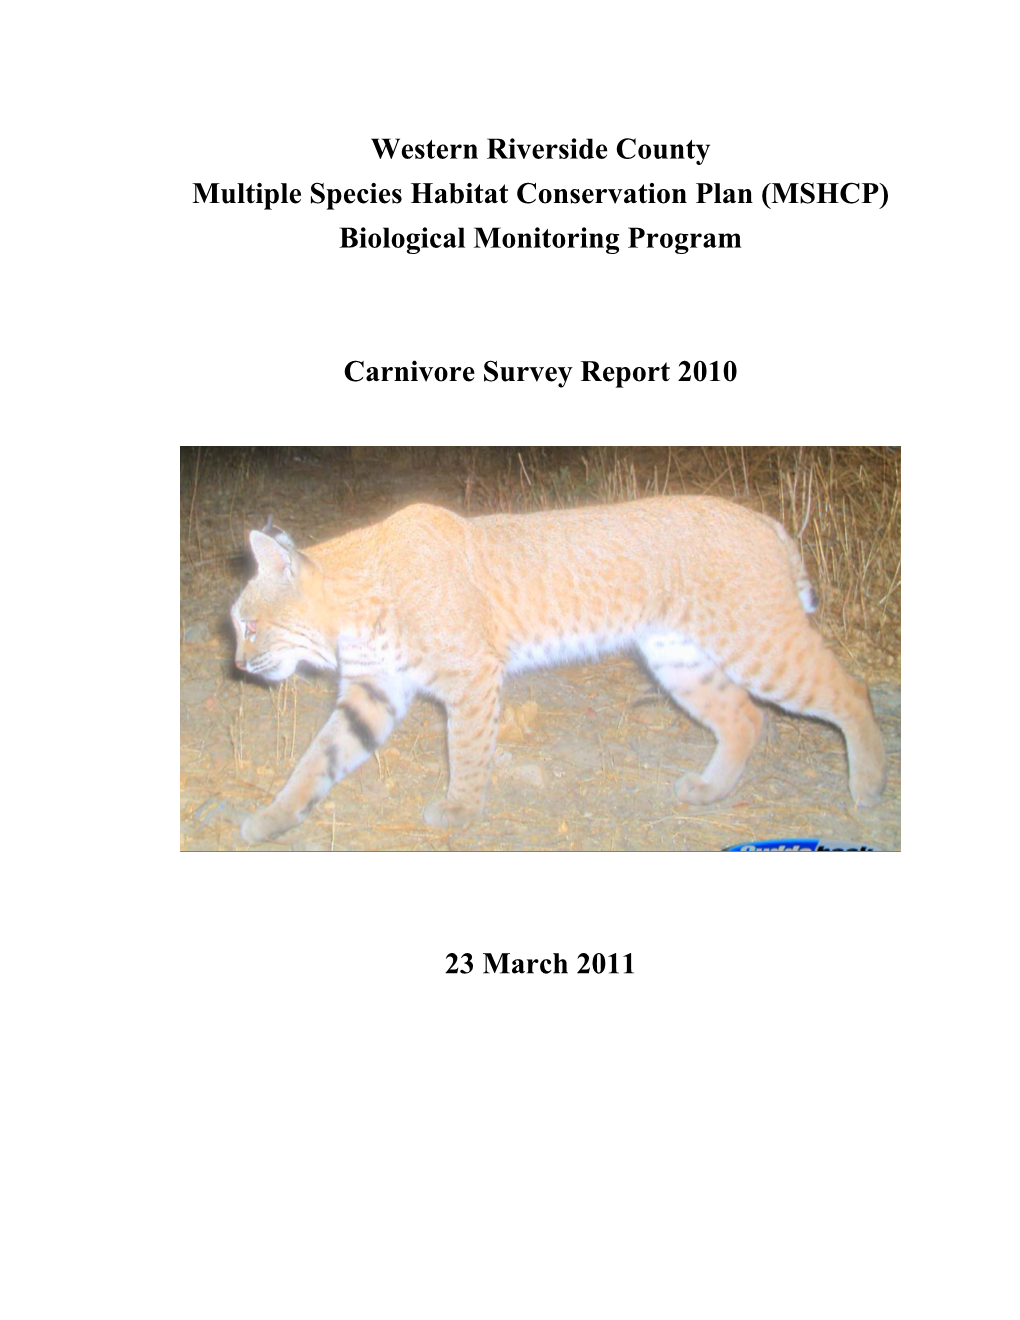 Carnivore Survey Report 2010